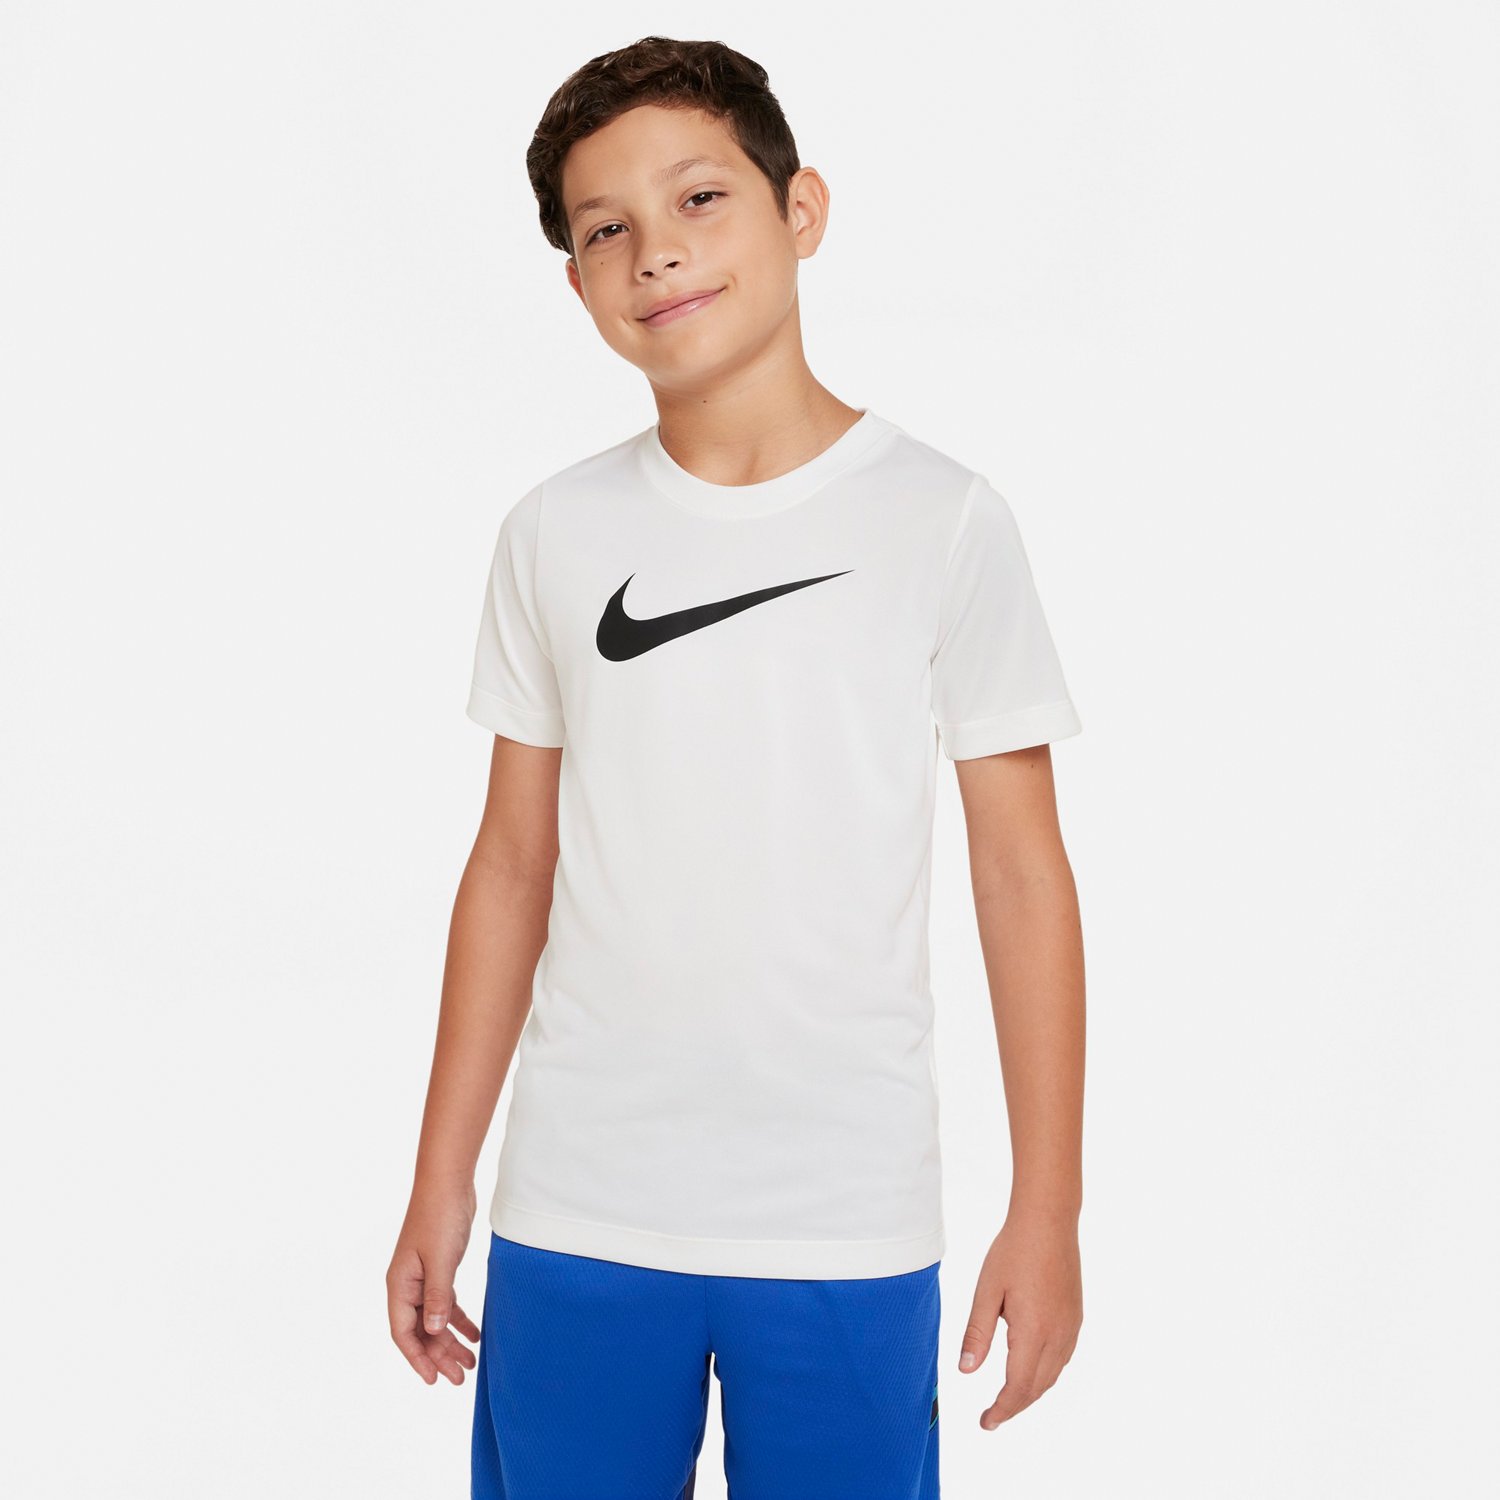 Stjerne Brandmand Enumerate Nike Boys' Legend Swoosh Short Sleeve T-shirt | Academy